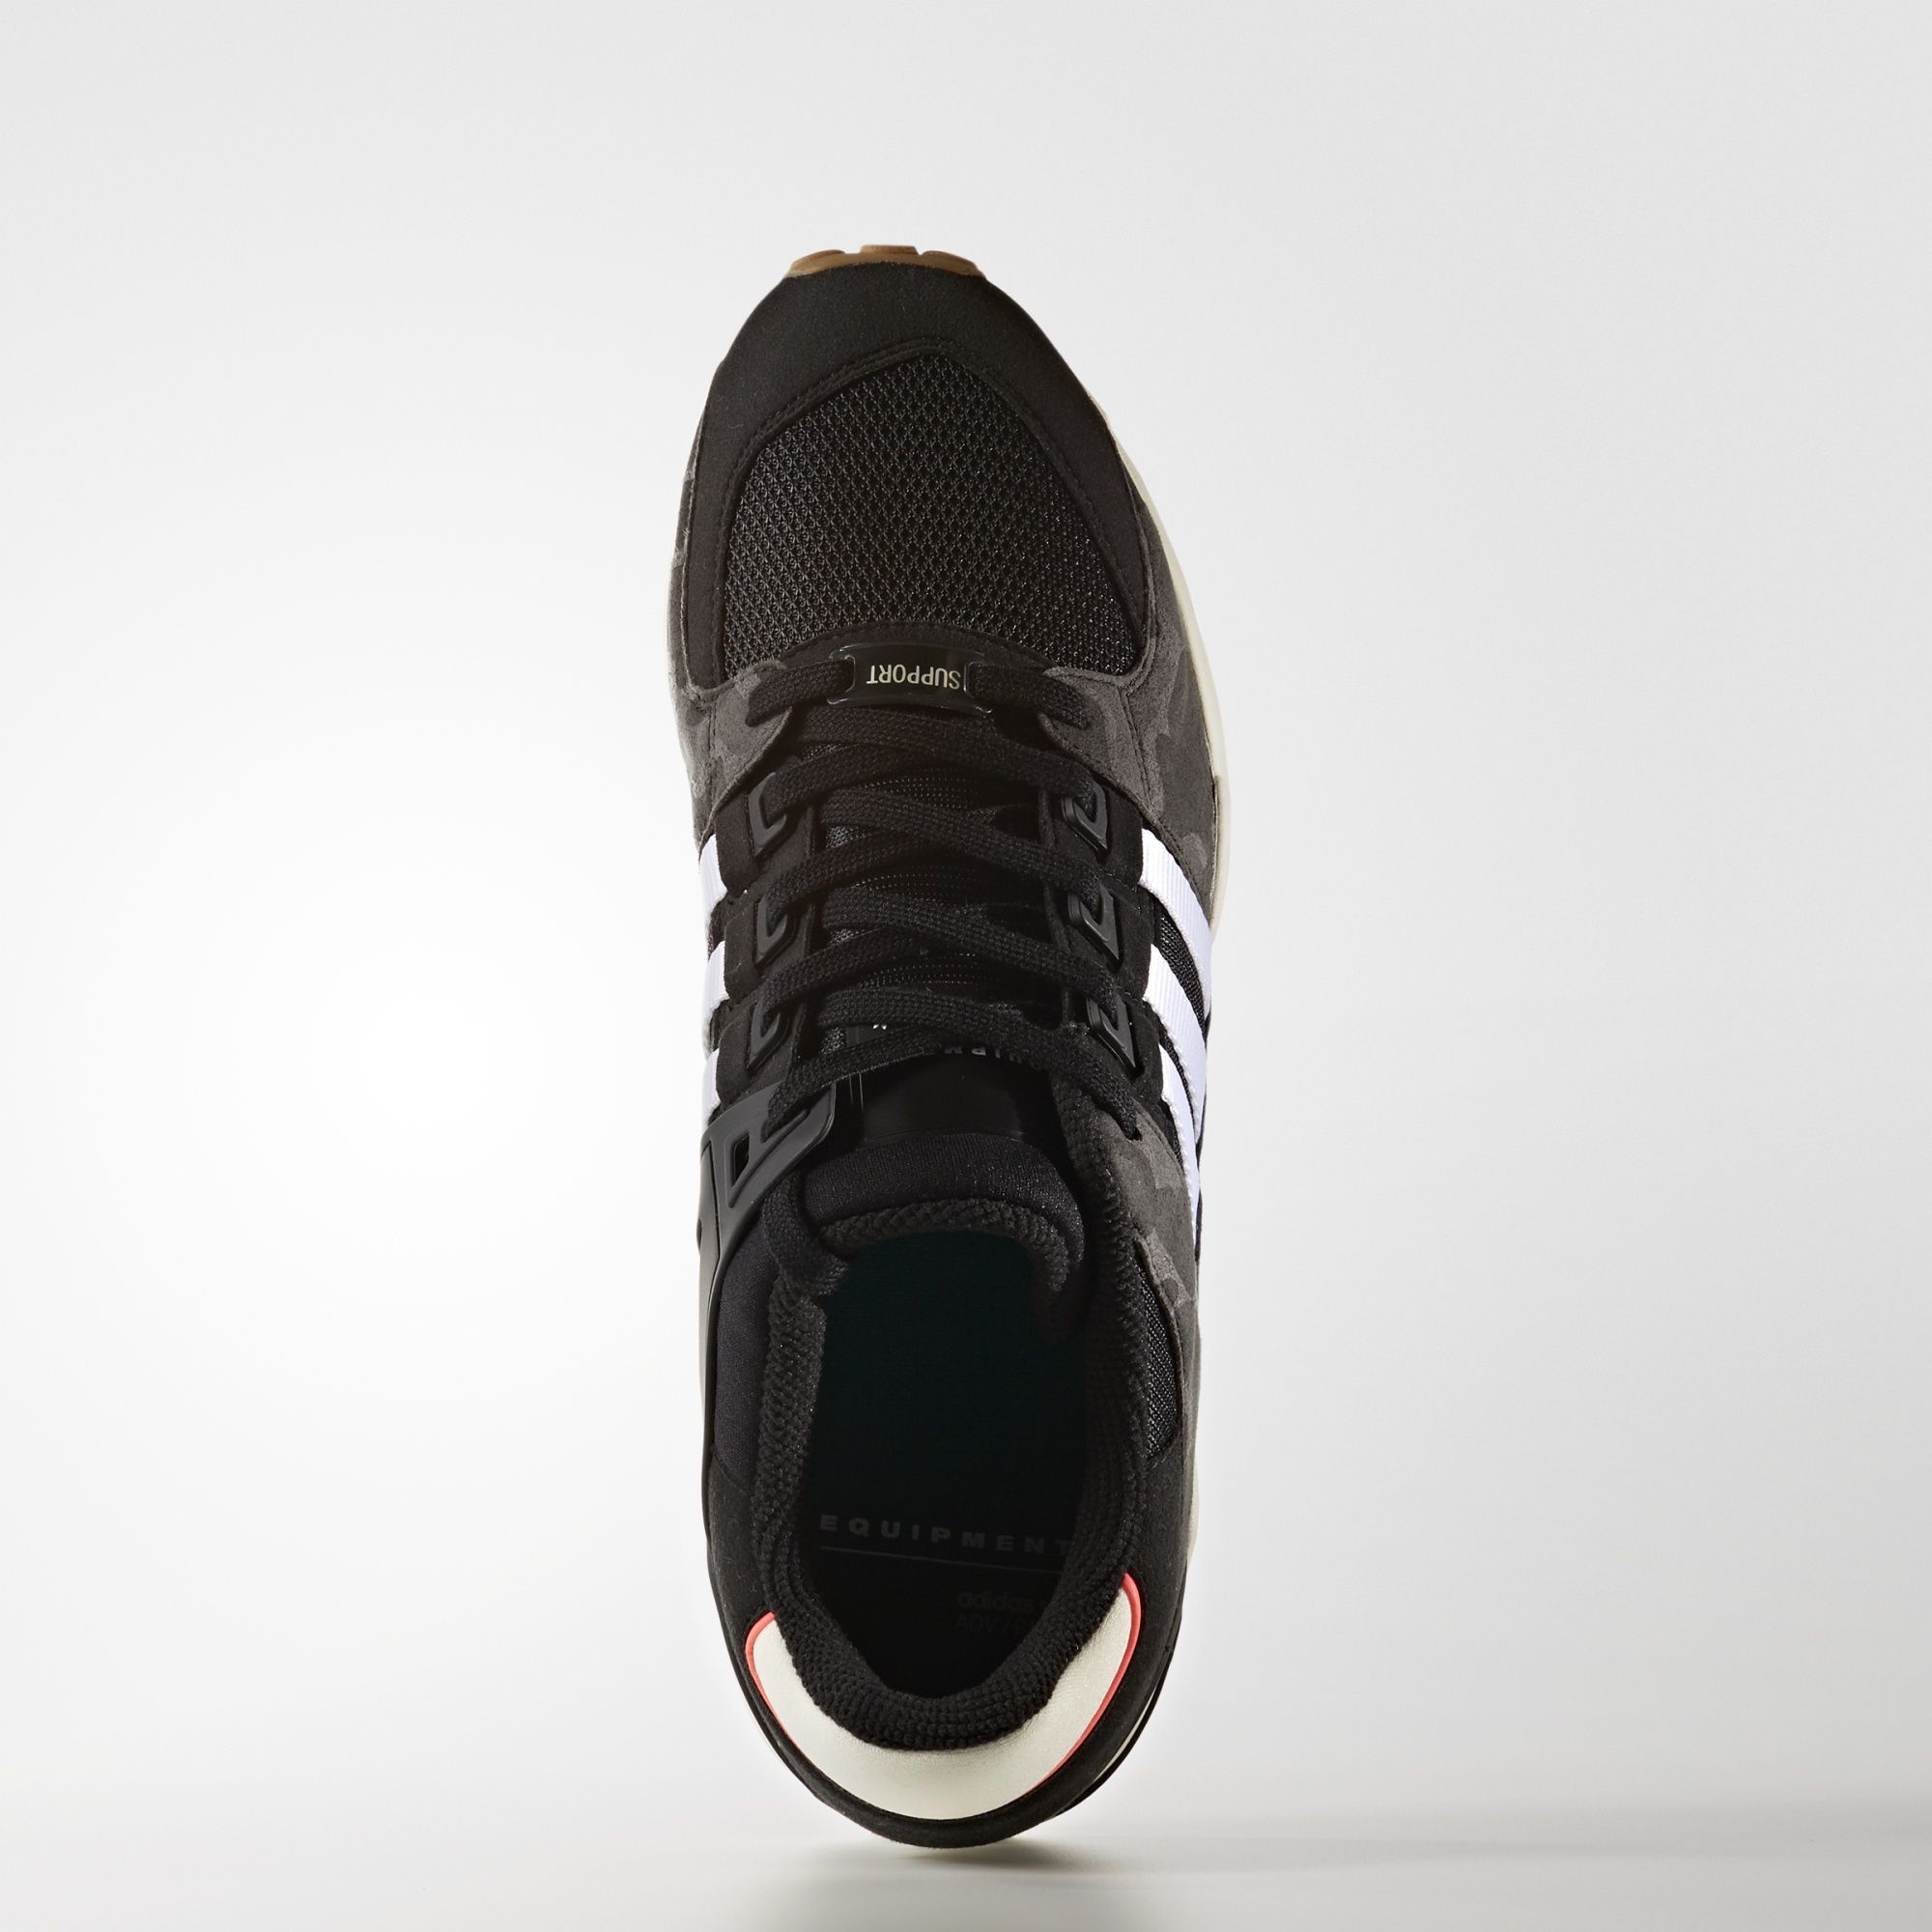 Adidas EQT Support RF
Core Black / Off White